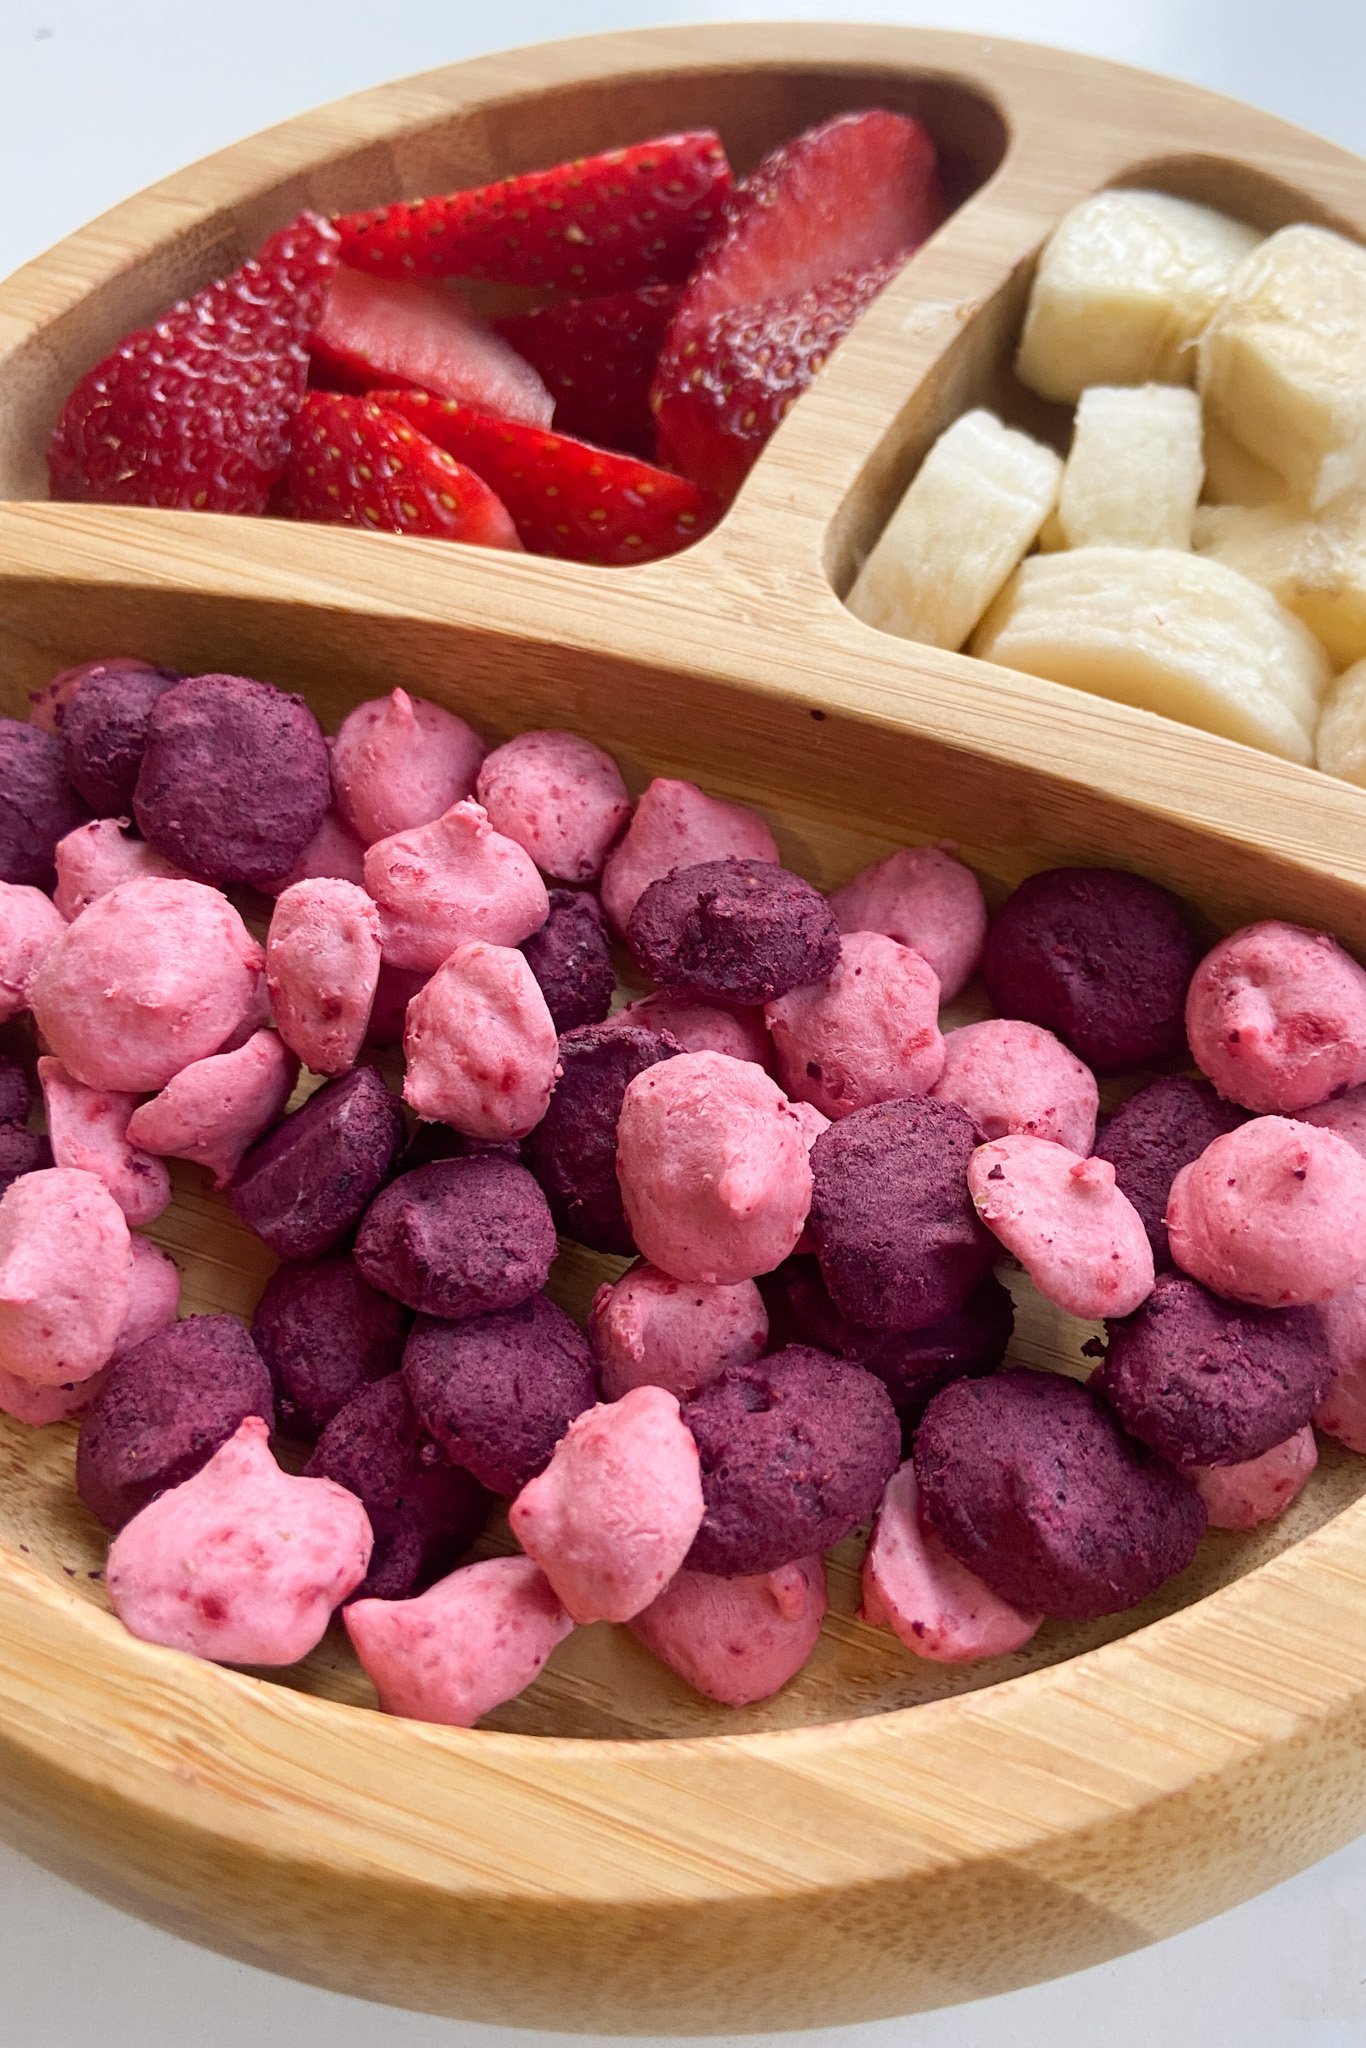 Yogurt - Berry Best Yogurt (BBY) Powder Mix (Frozen Yogurt)